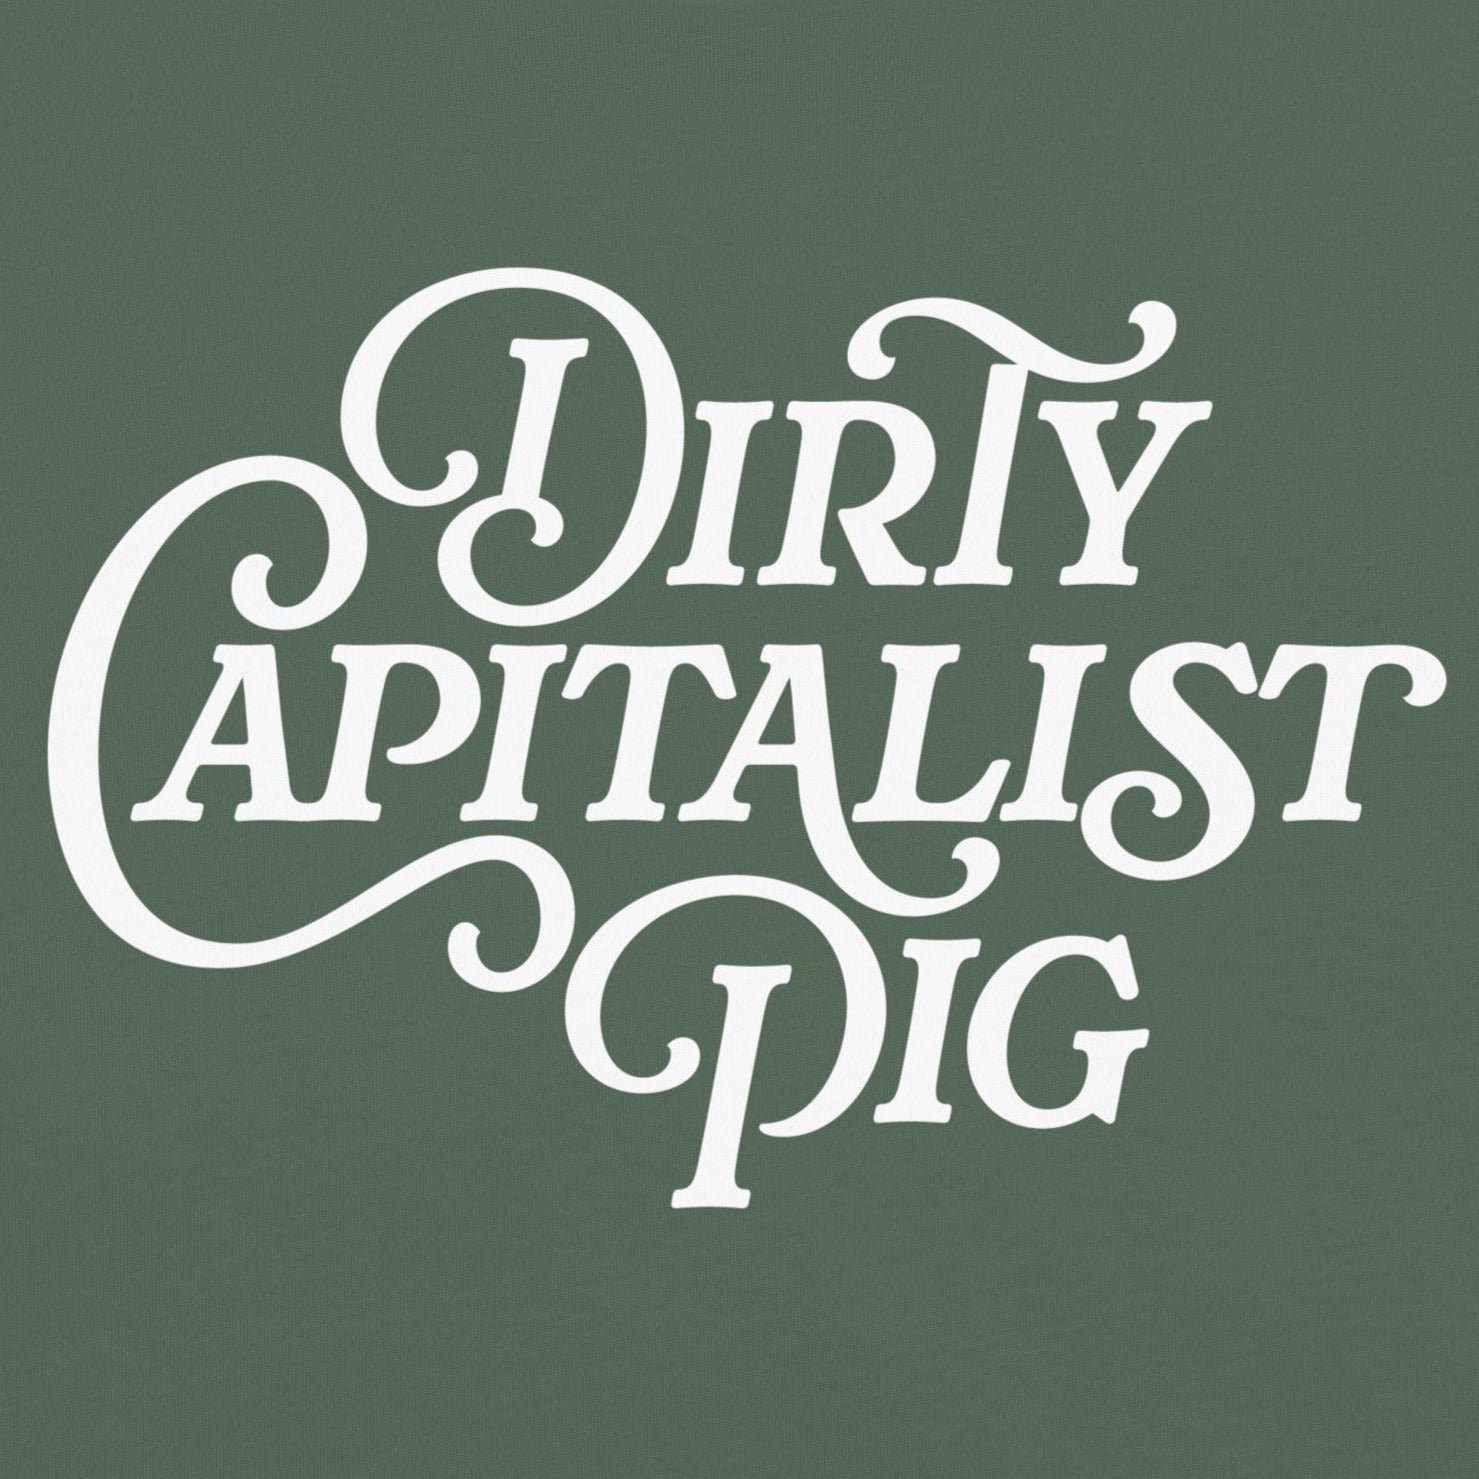 Dirty Capitalist Pig Garment-dyed Heavyweight T-Shirt